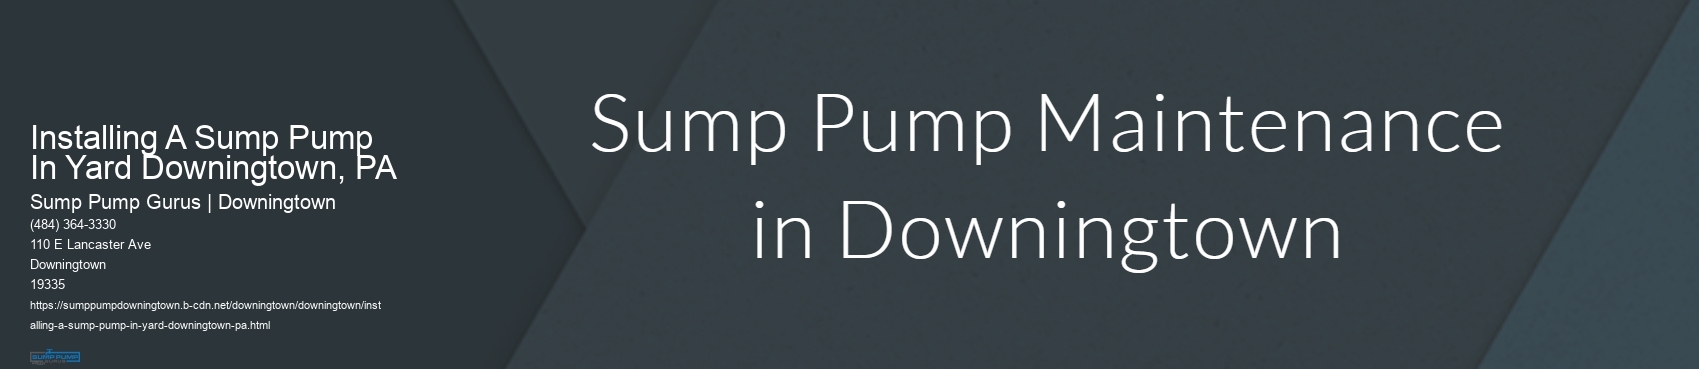 Installing A Sump Pump In Yard Downingtown, PA